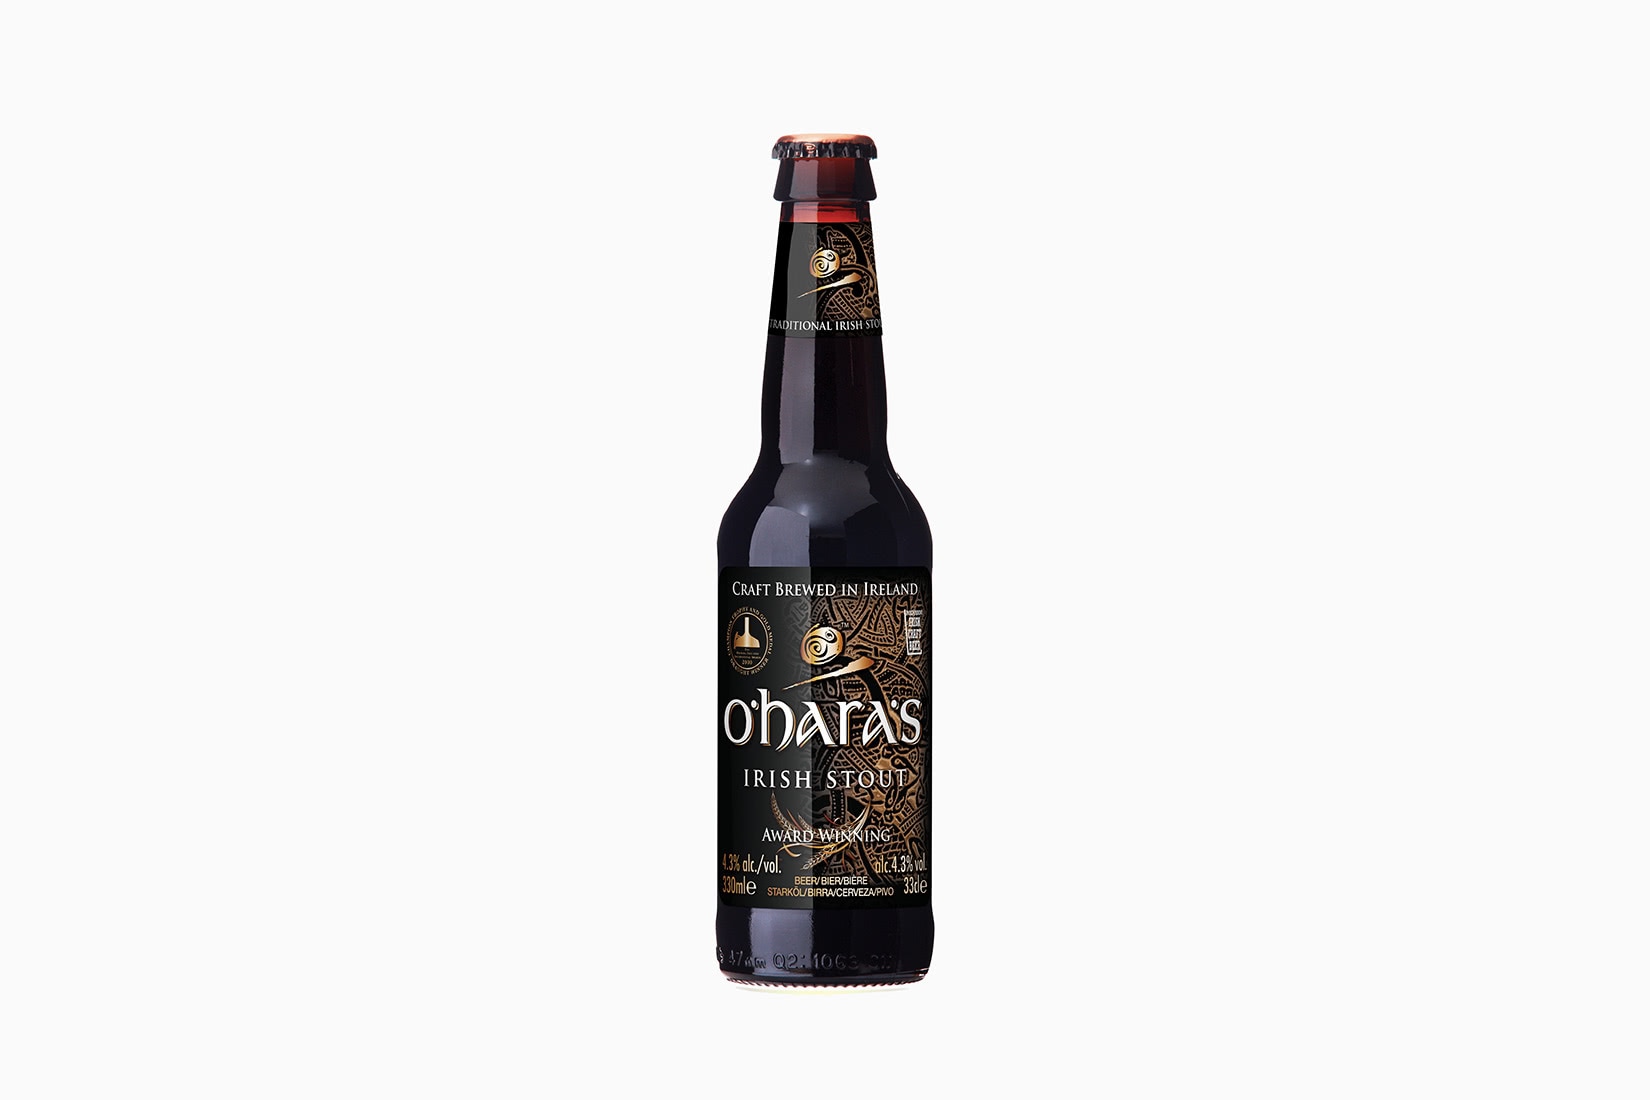 meilleures marques de bière o'hara's irish stout - Luxe Digital